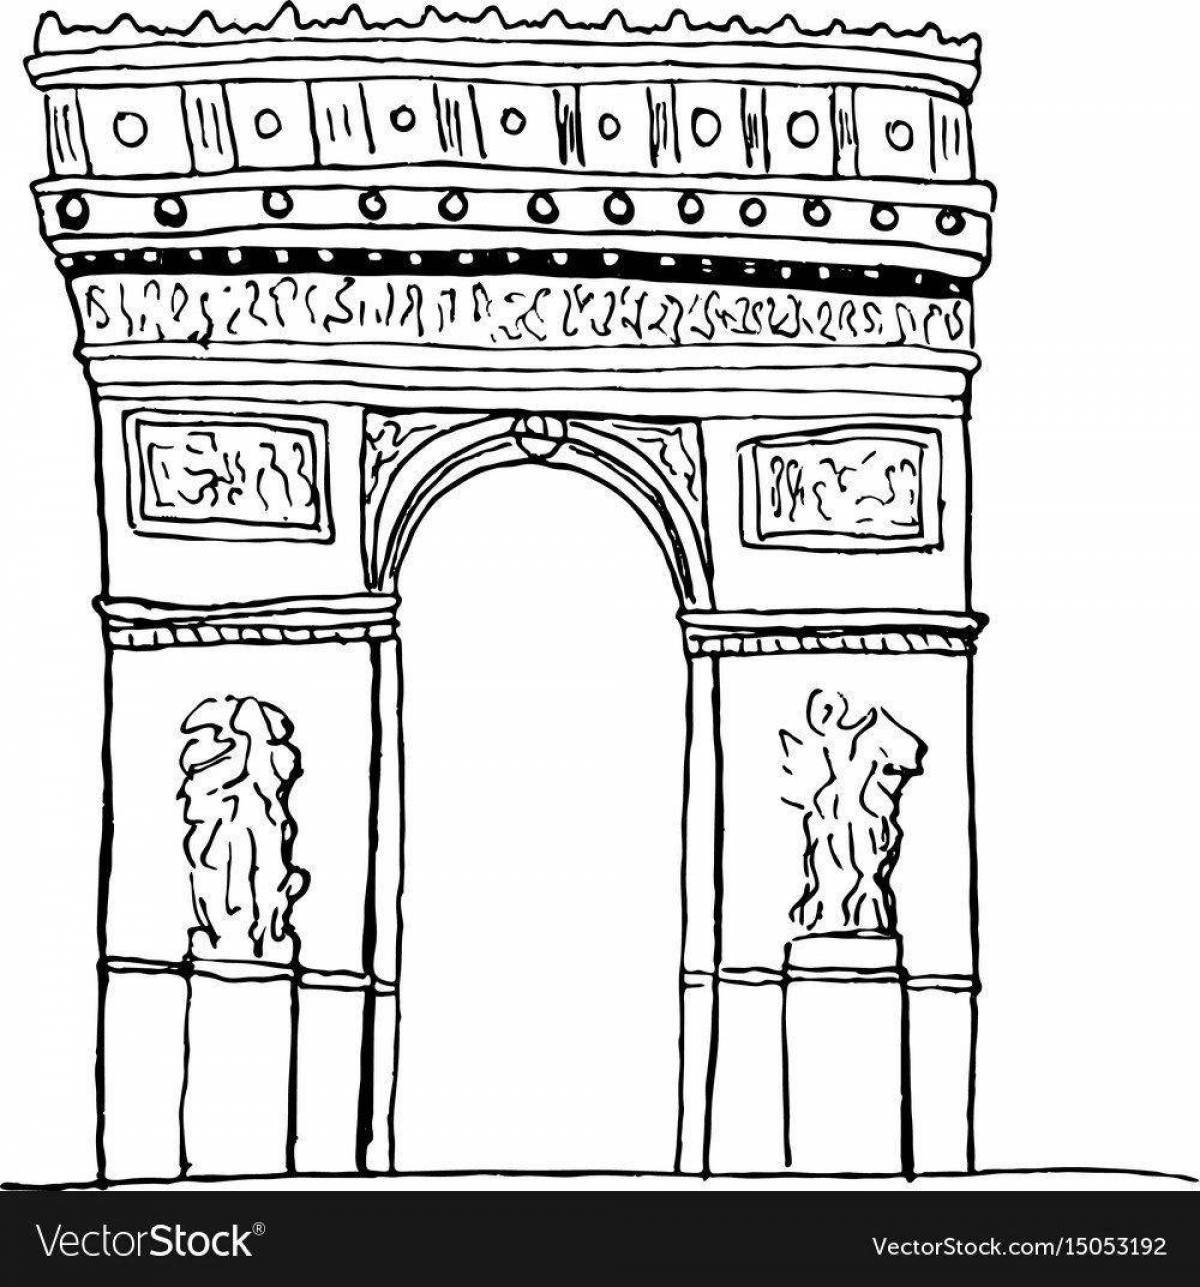 Triumphal arch #20